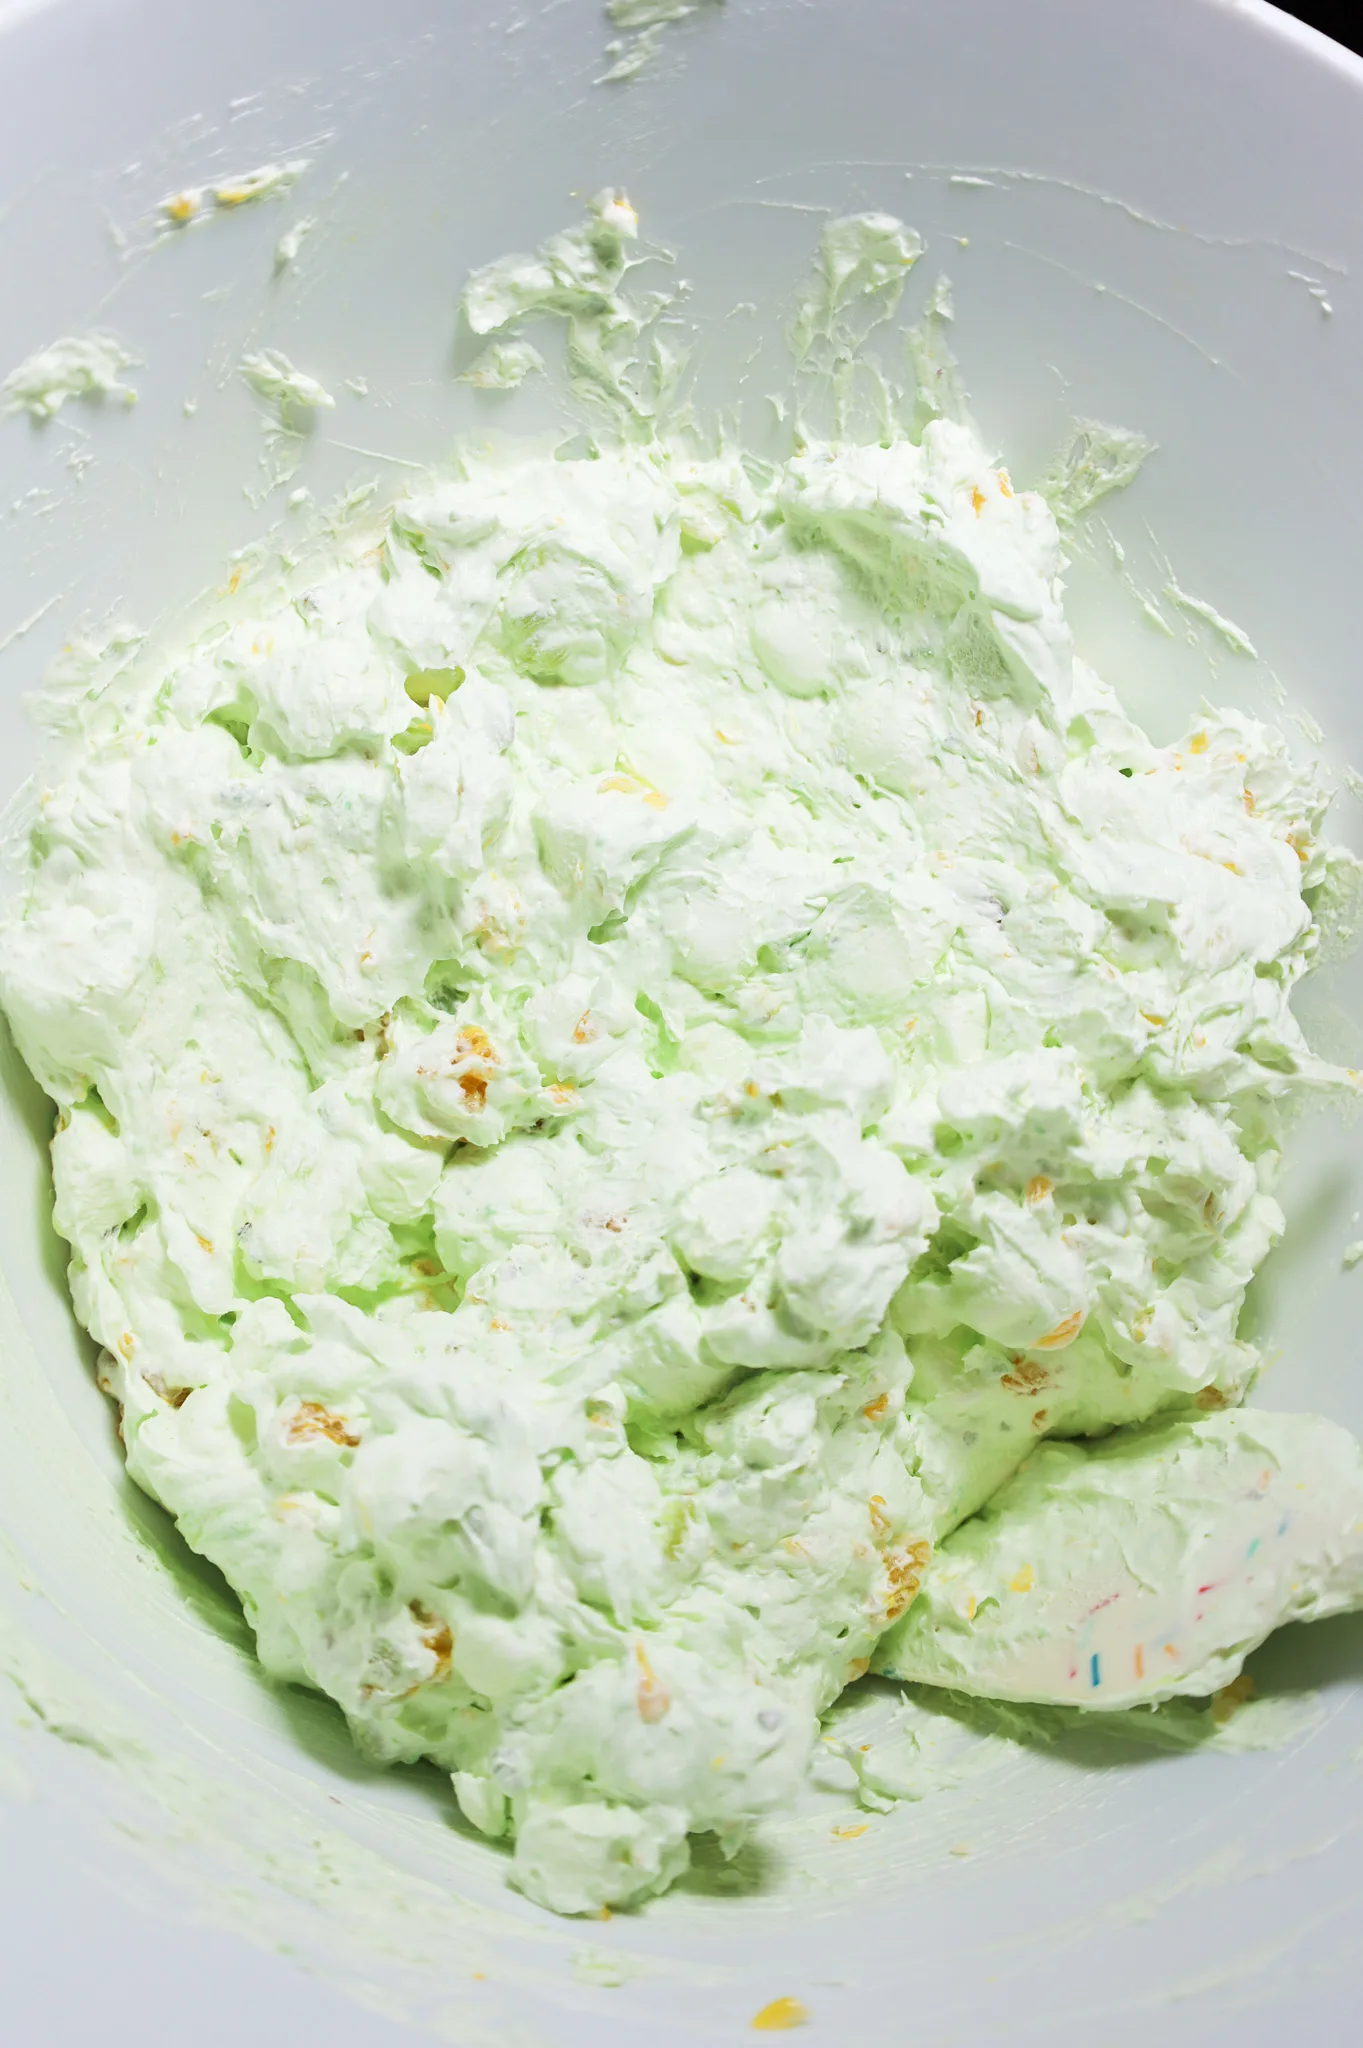 pistachio fluff salad mixture in a mixing bowl